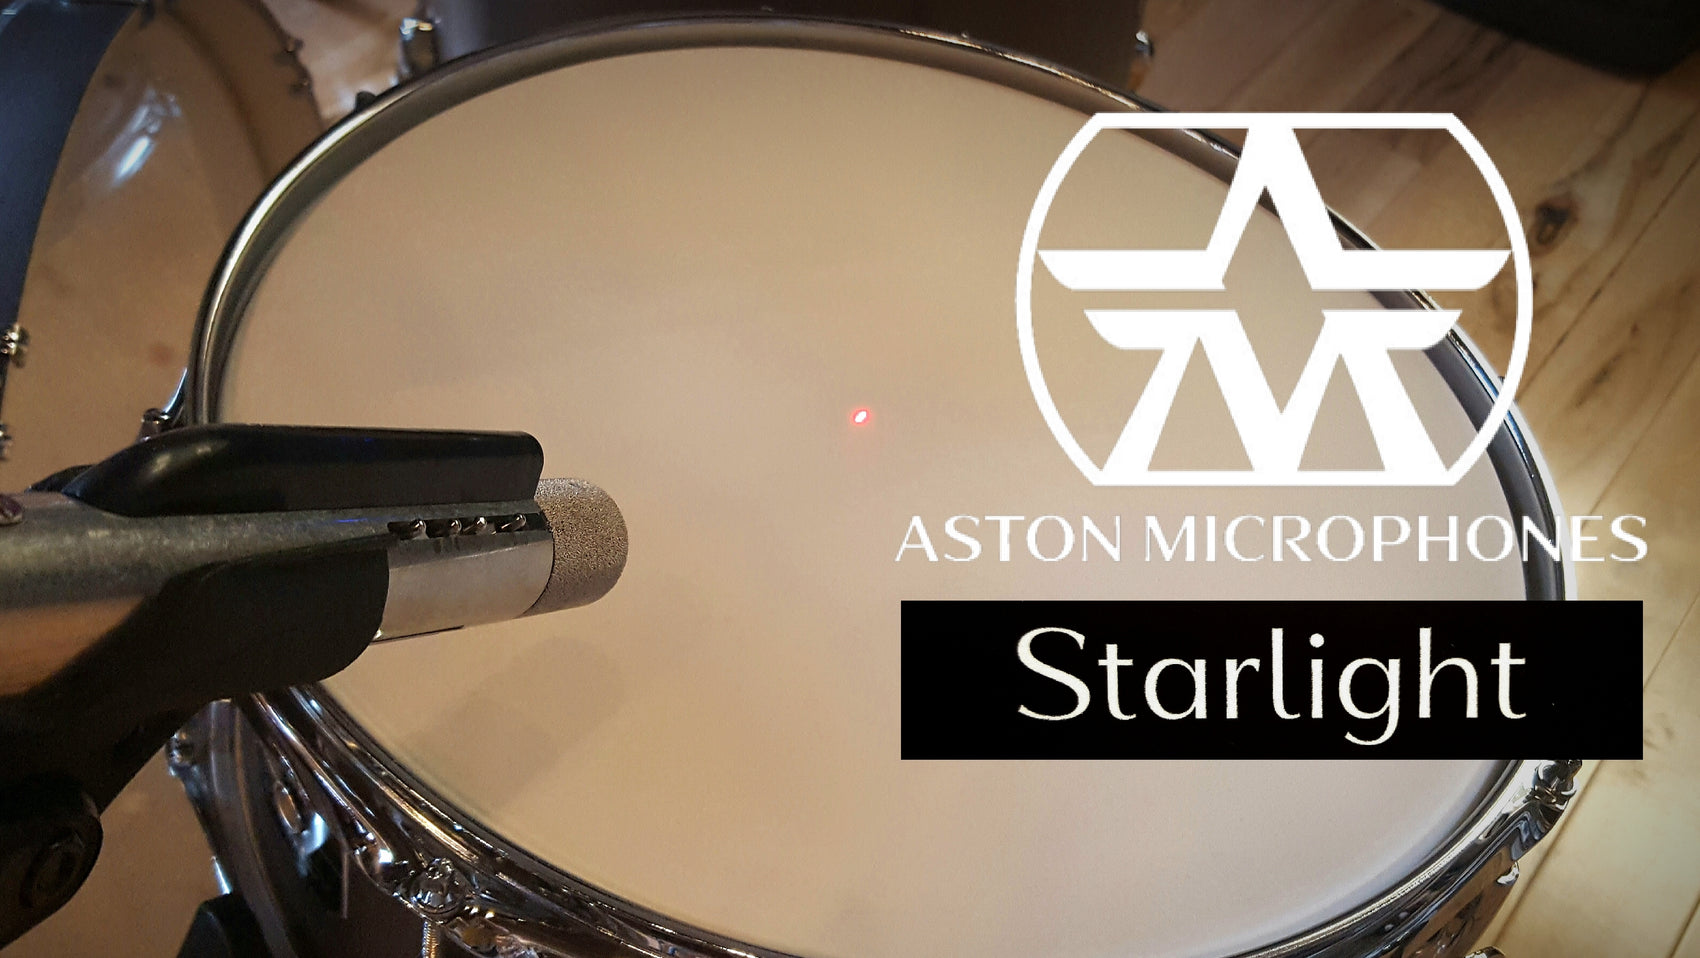 Aston Microphones Starlight Sound Samples